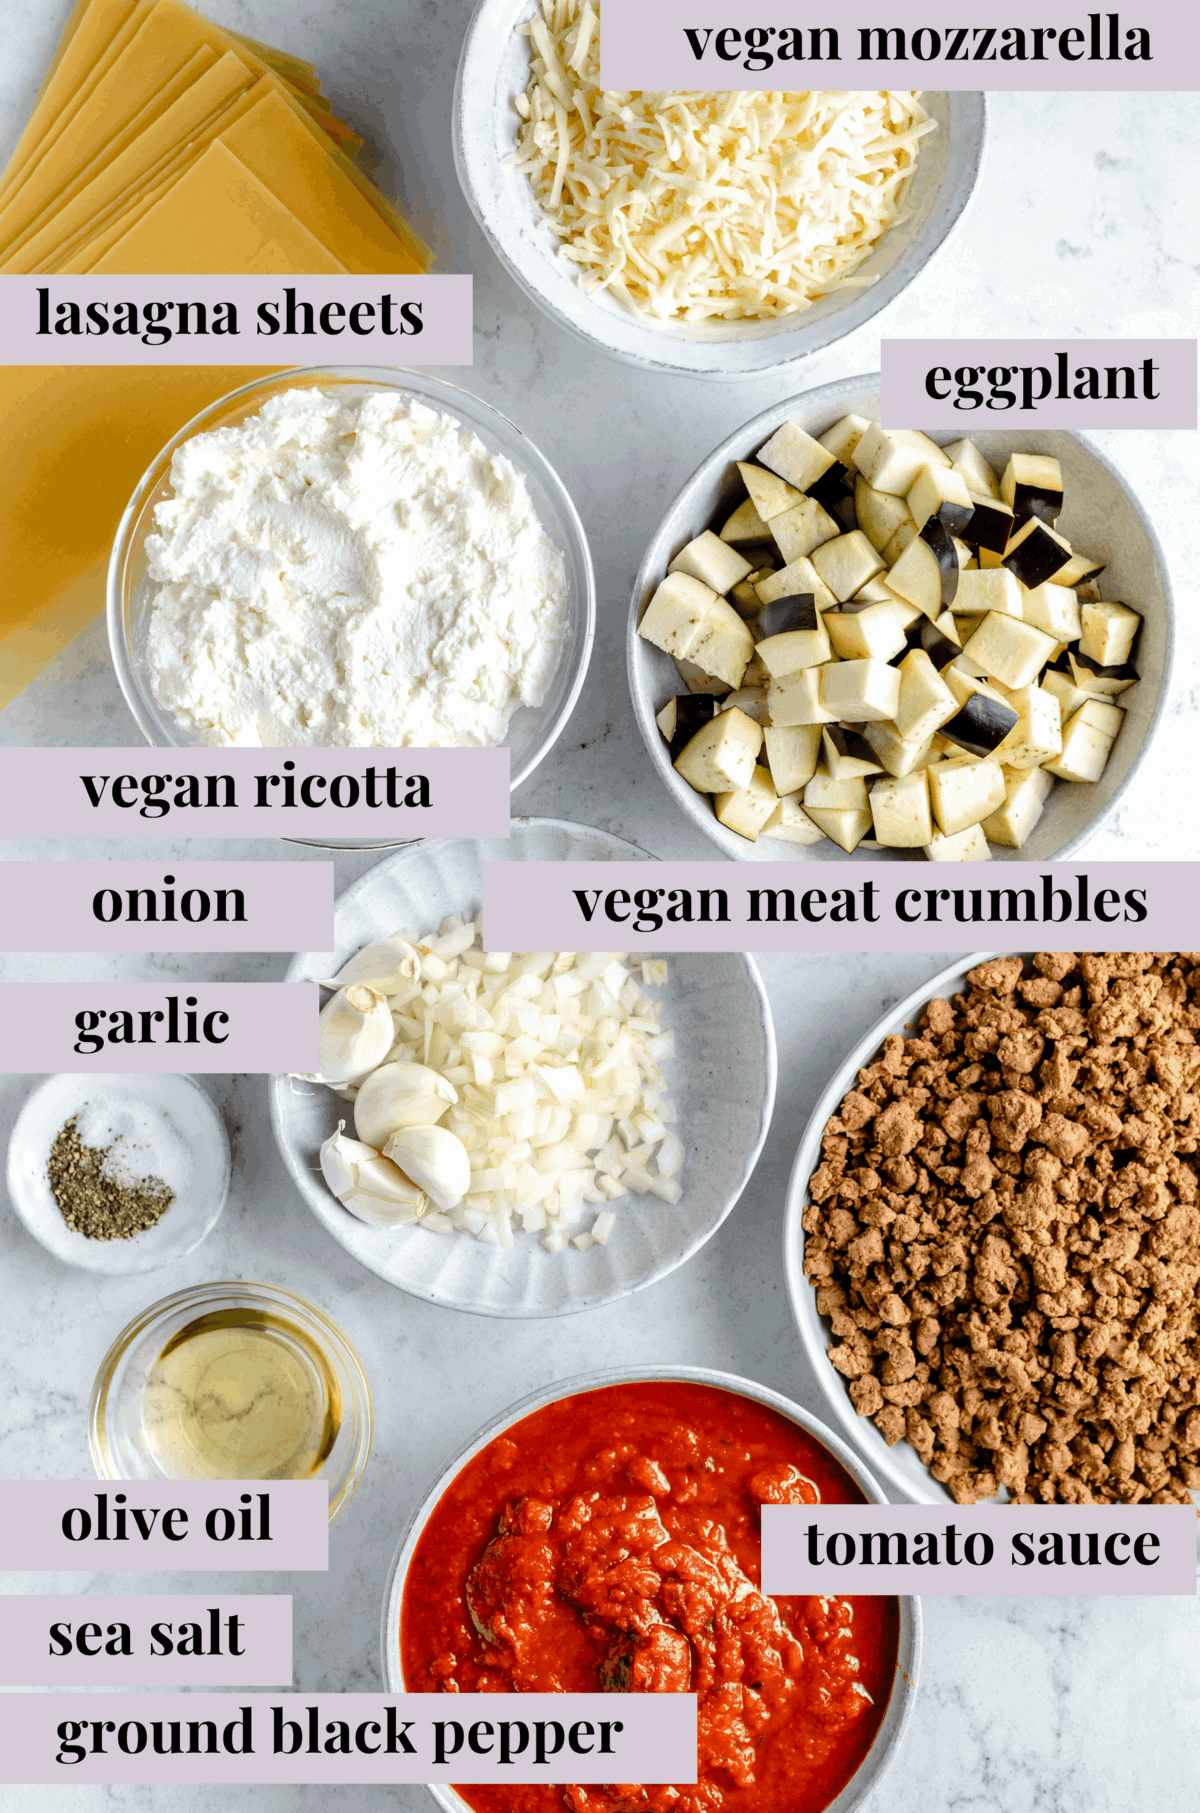 Ingredients for vegan lasagna.